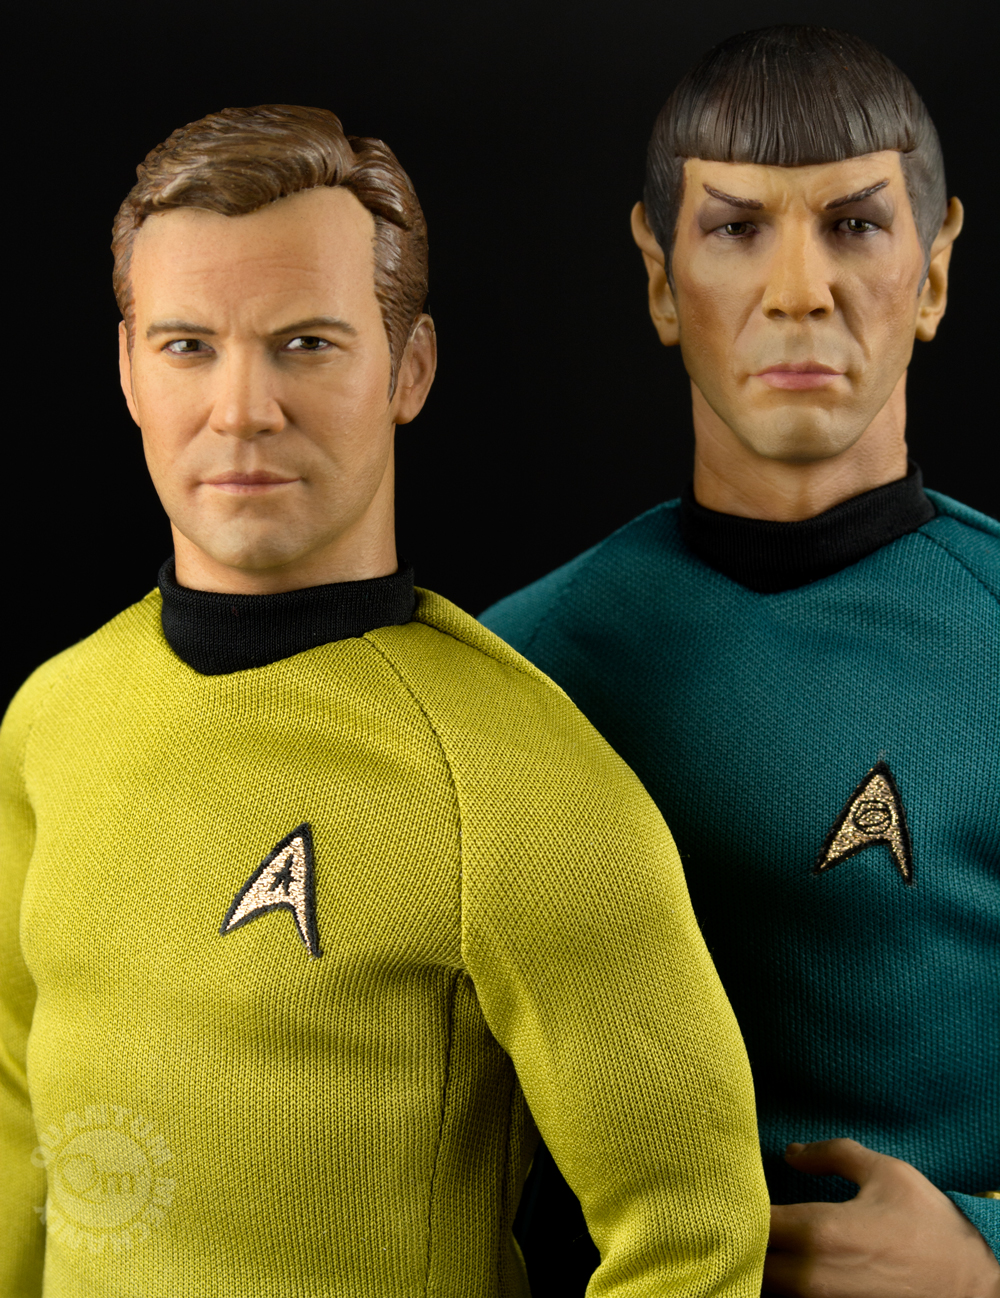 2best star trek captain kirk and mr spock action figures ive seen3